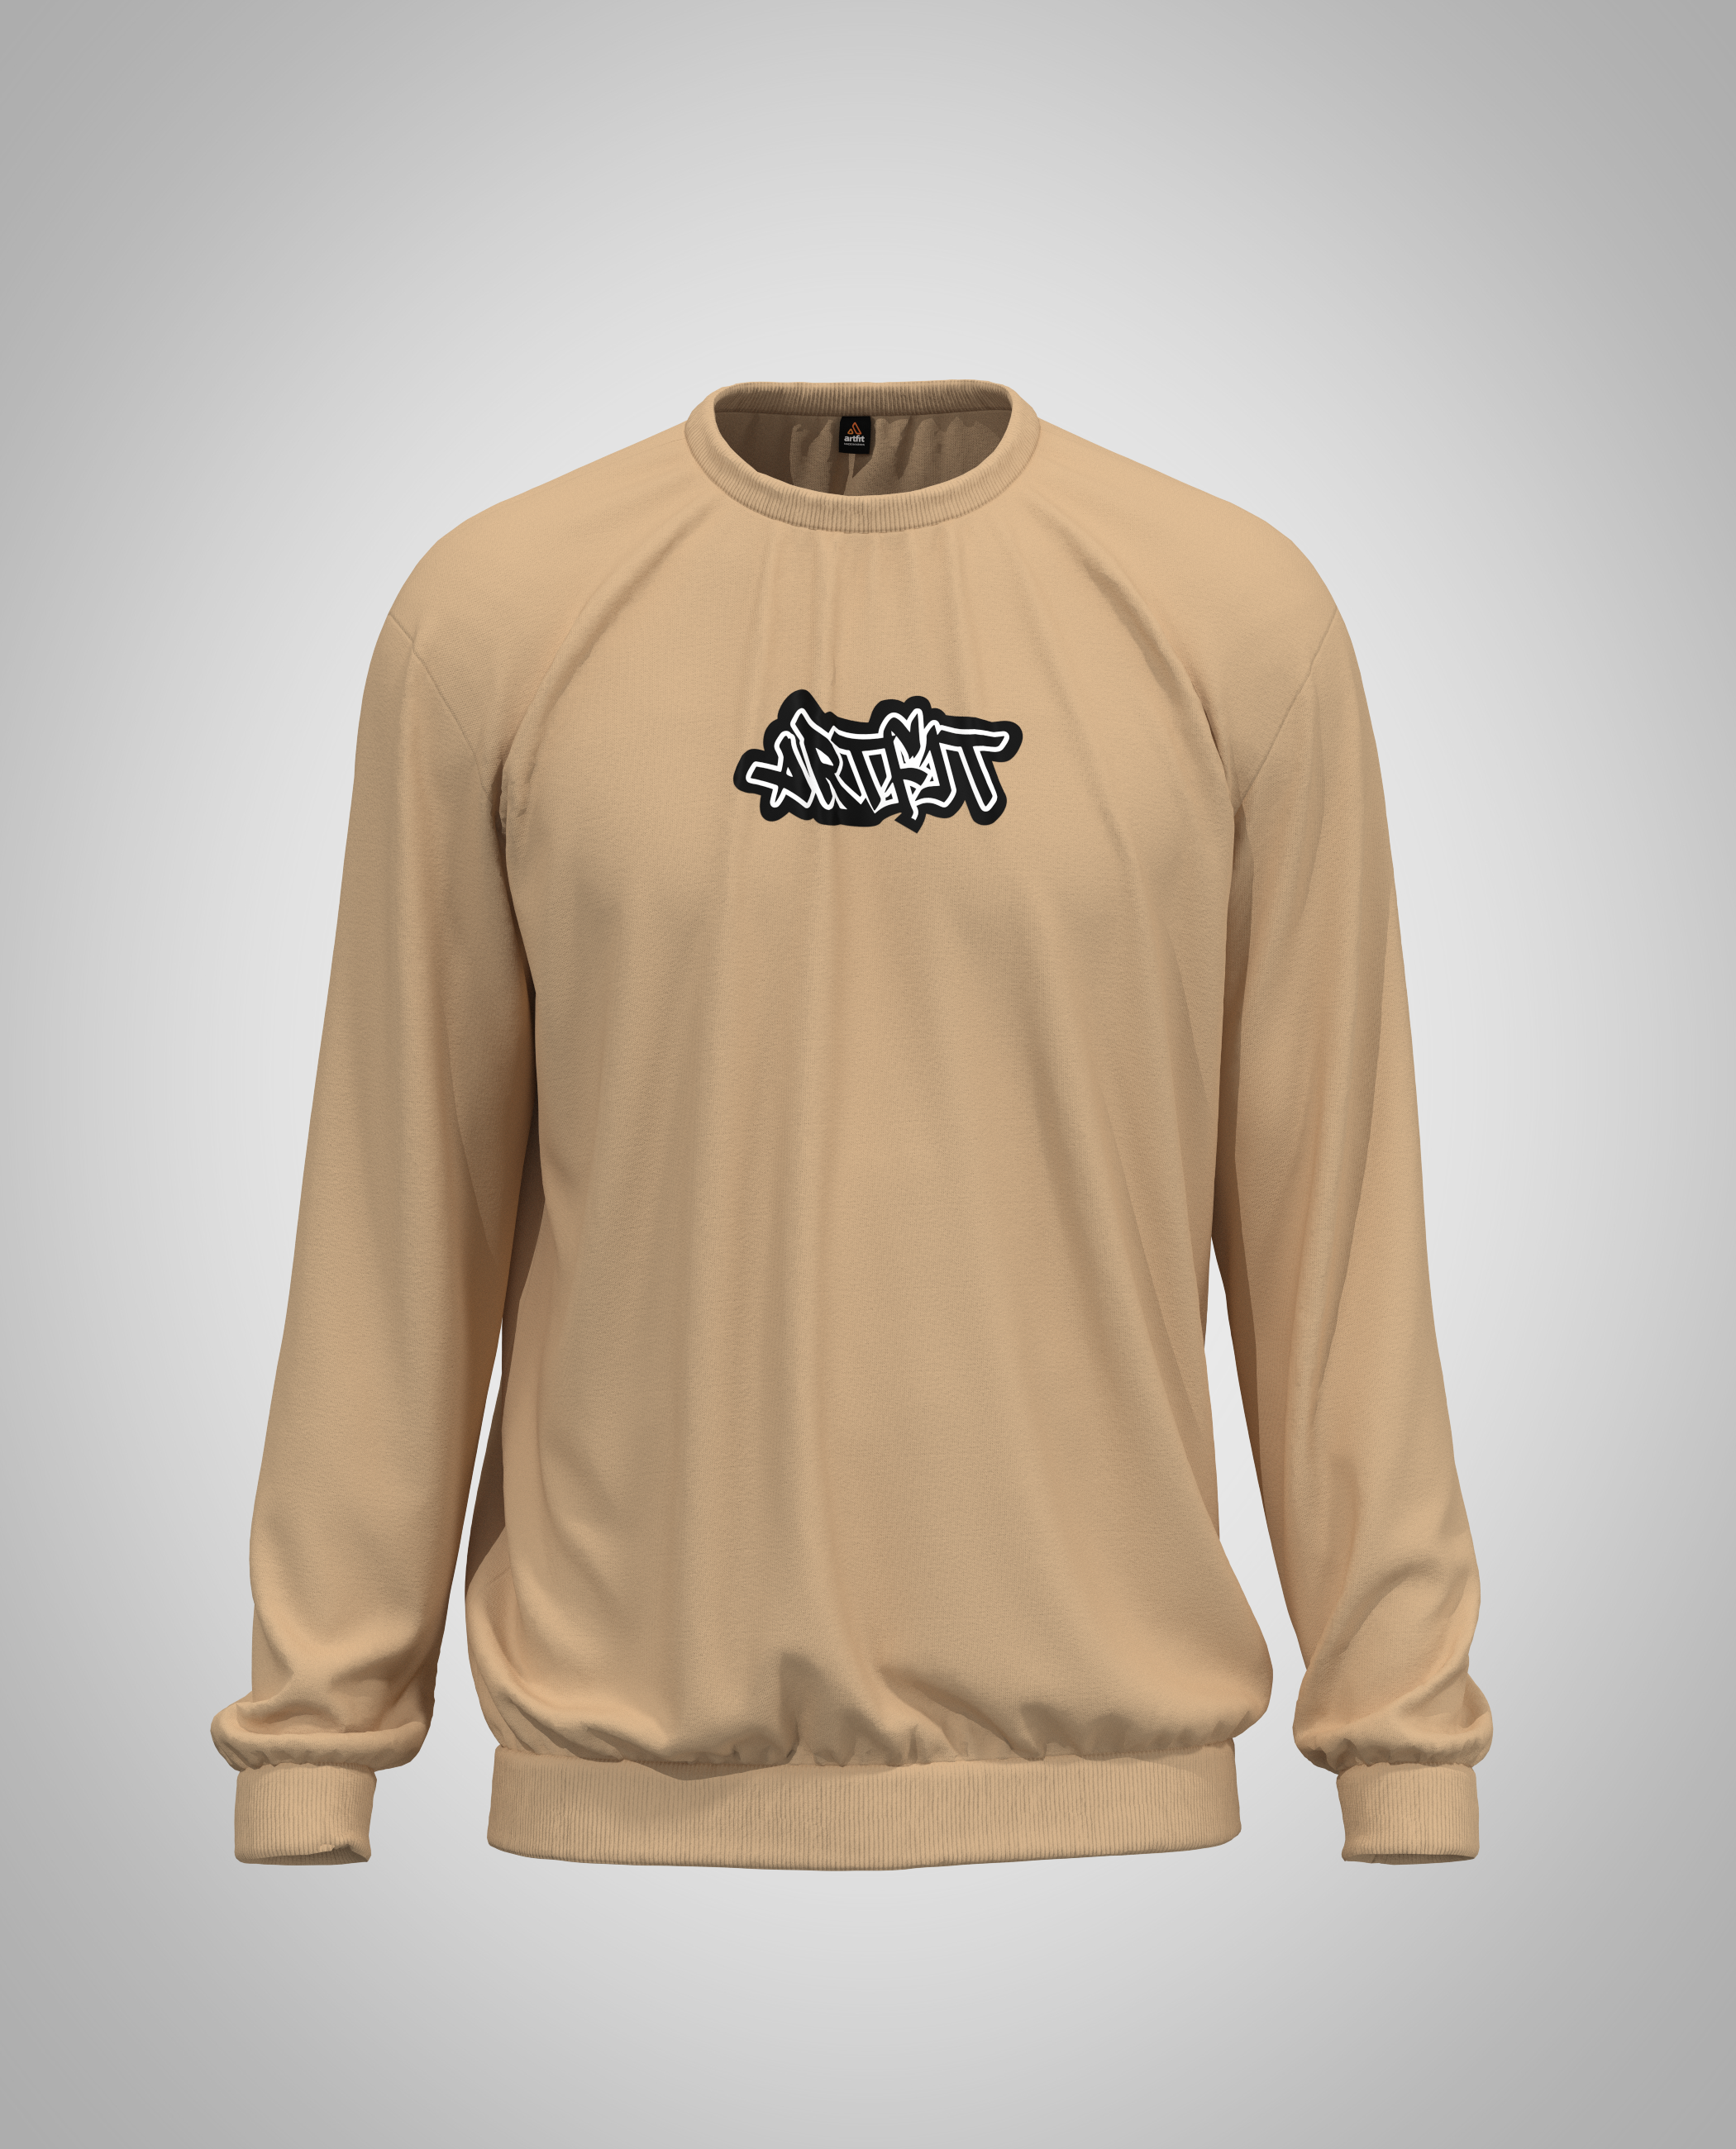 Brown Sweatshirt(Heavy Fabric)